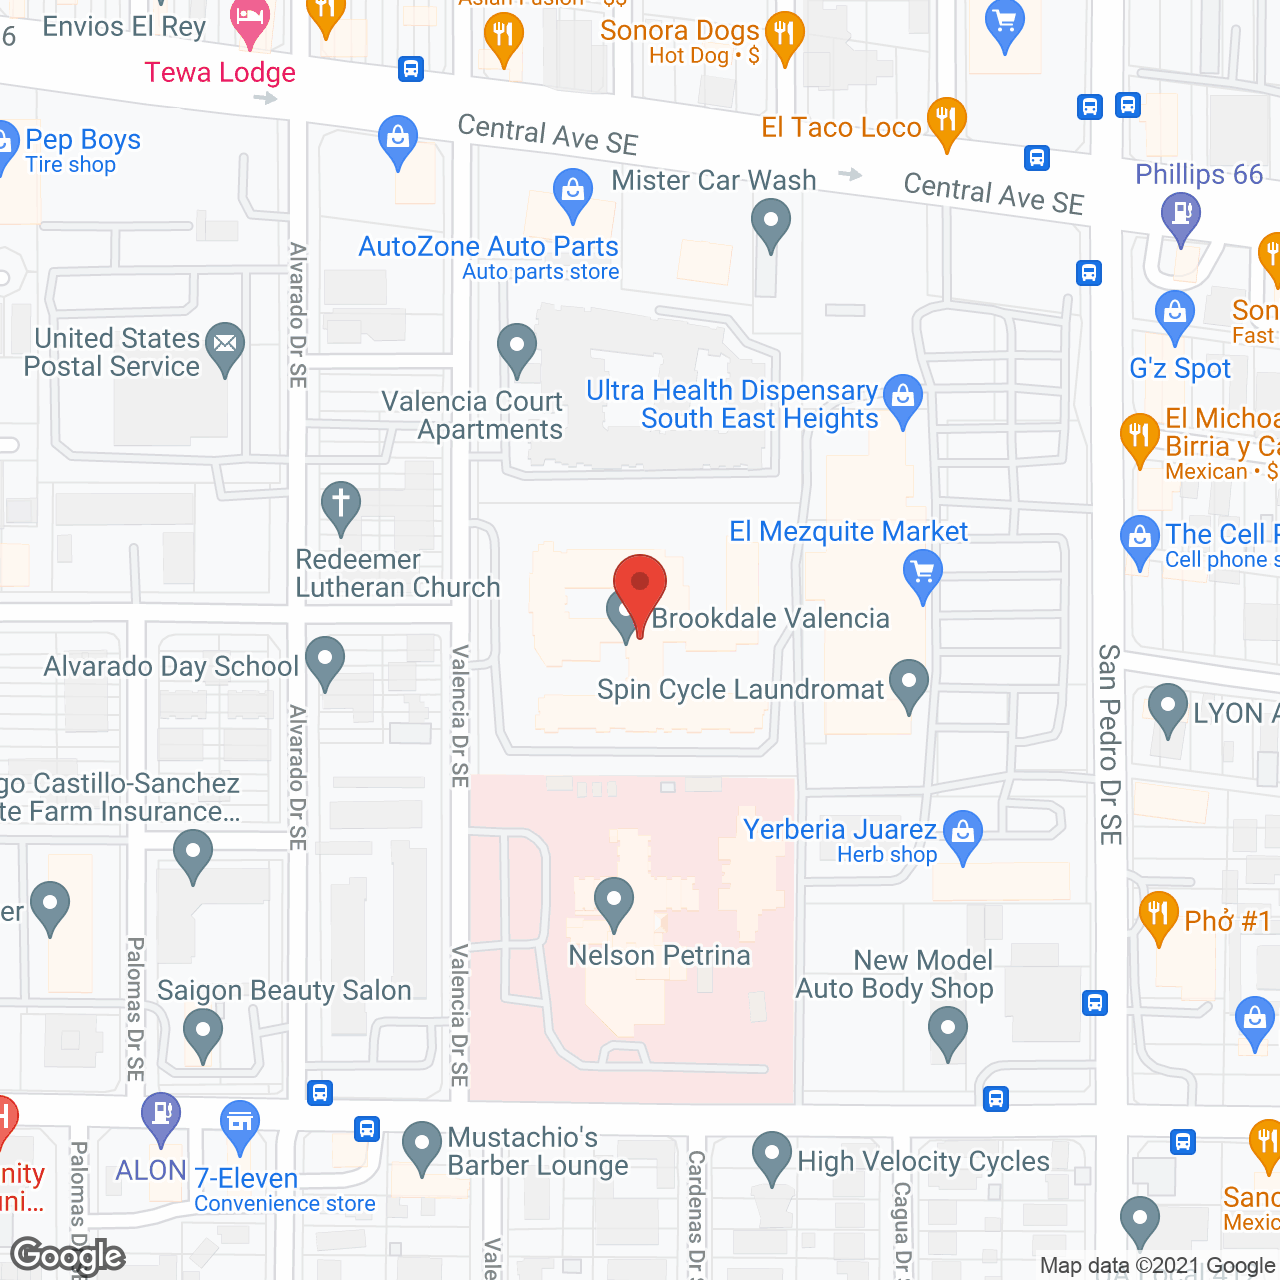 Brookdale Valencia in google map